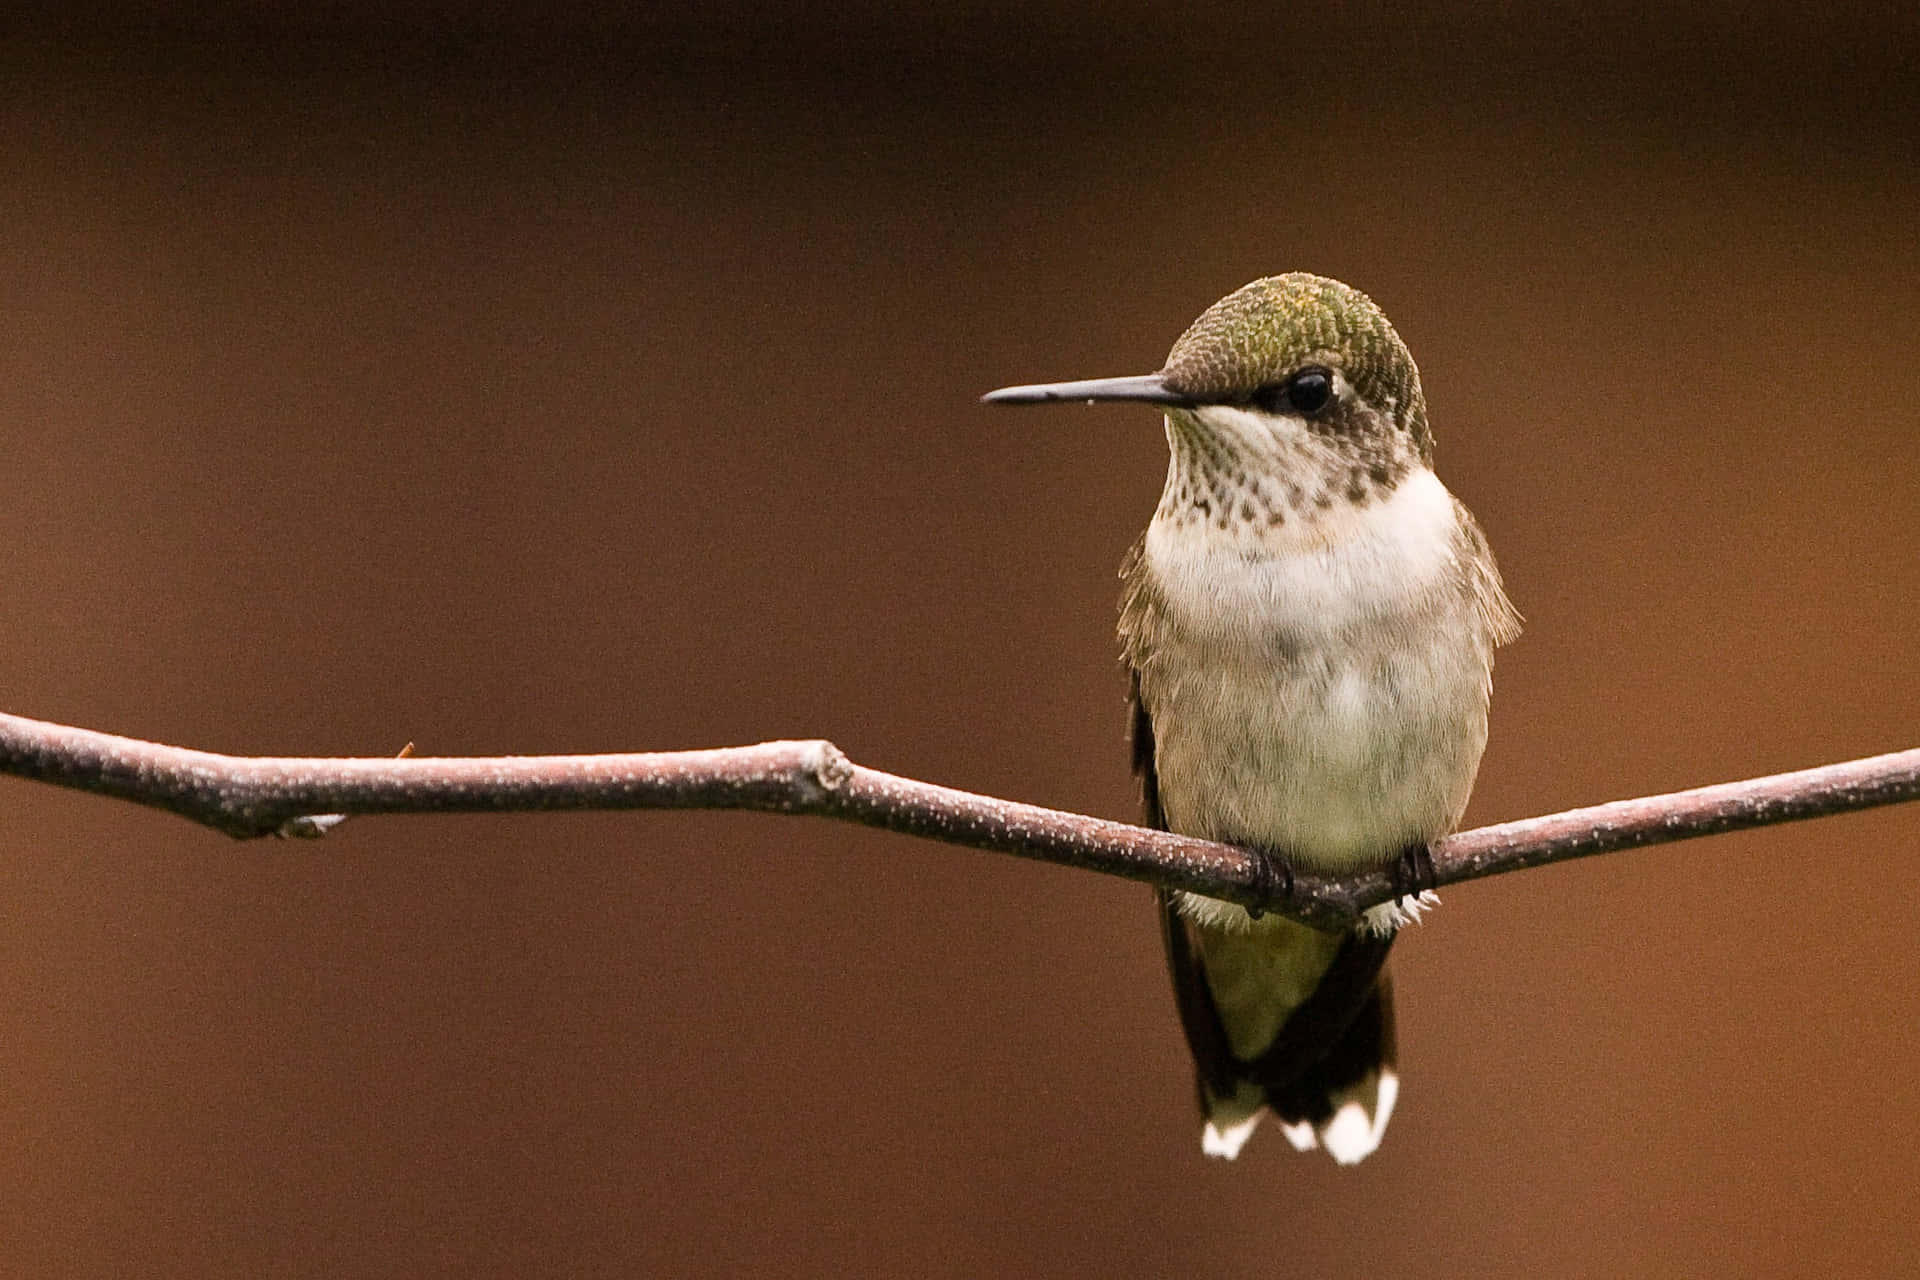 A unique perspective of a hummingbird nest.